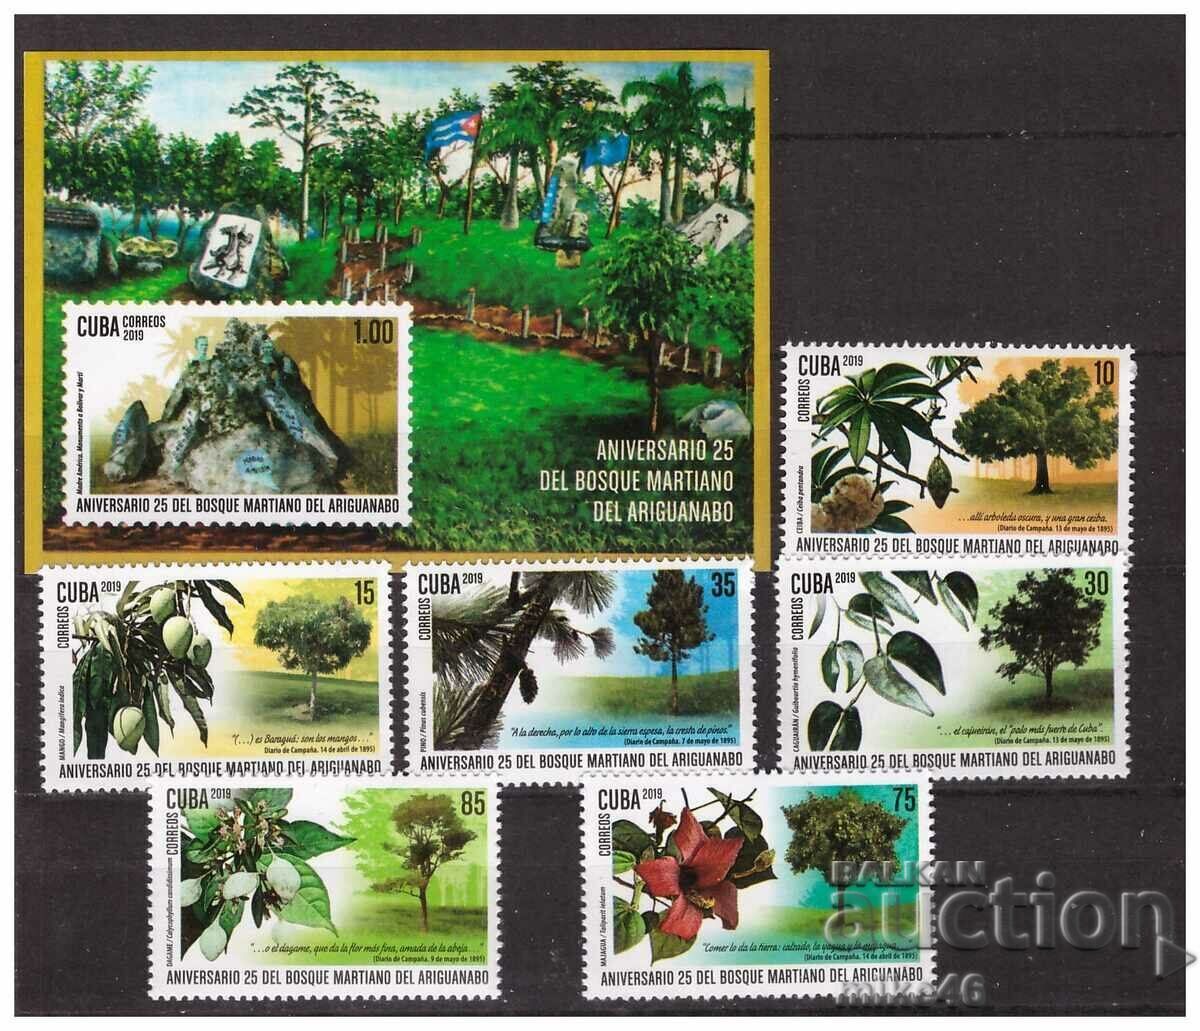 CUBA 2019 TREES pure series and block